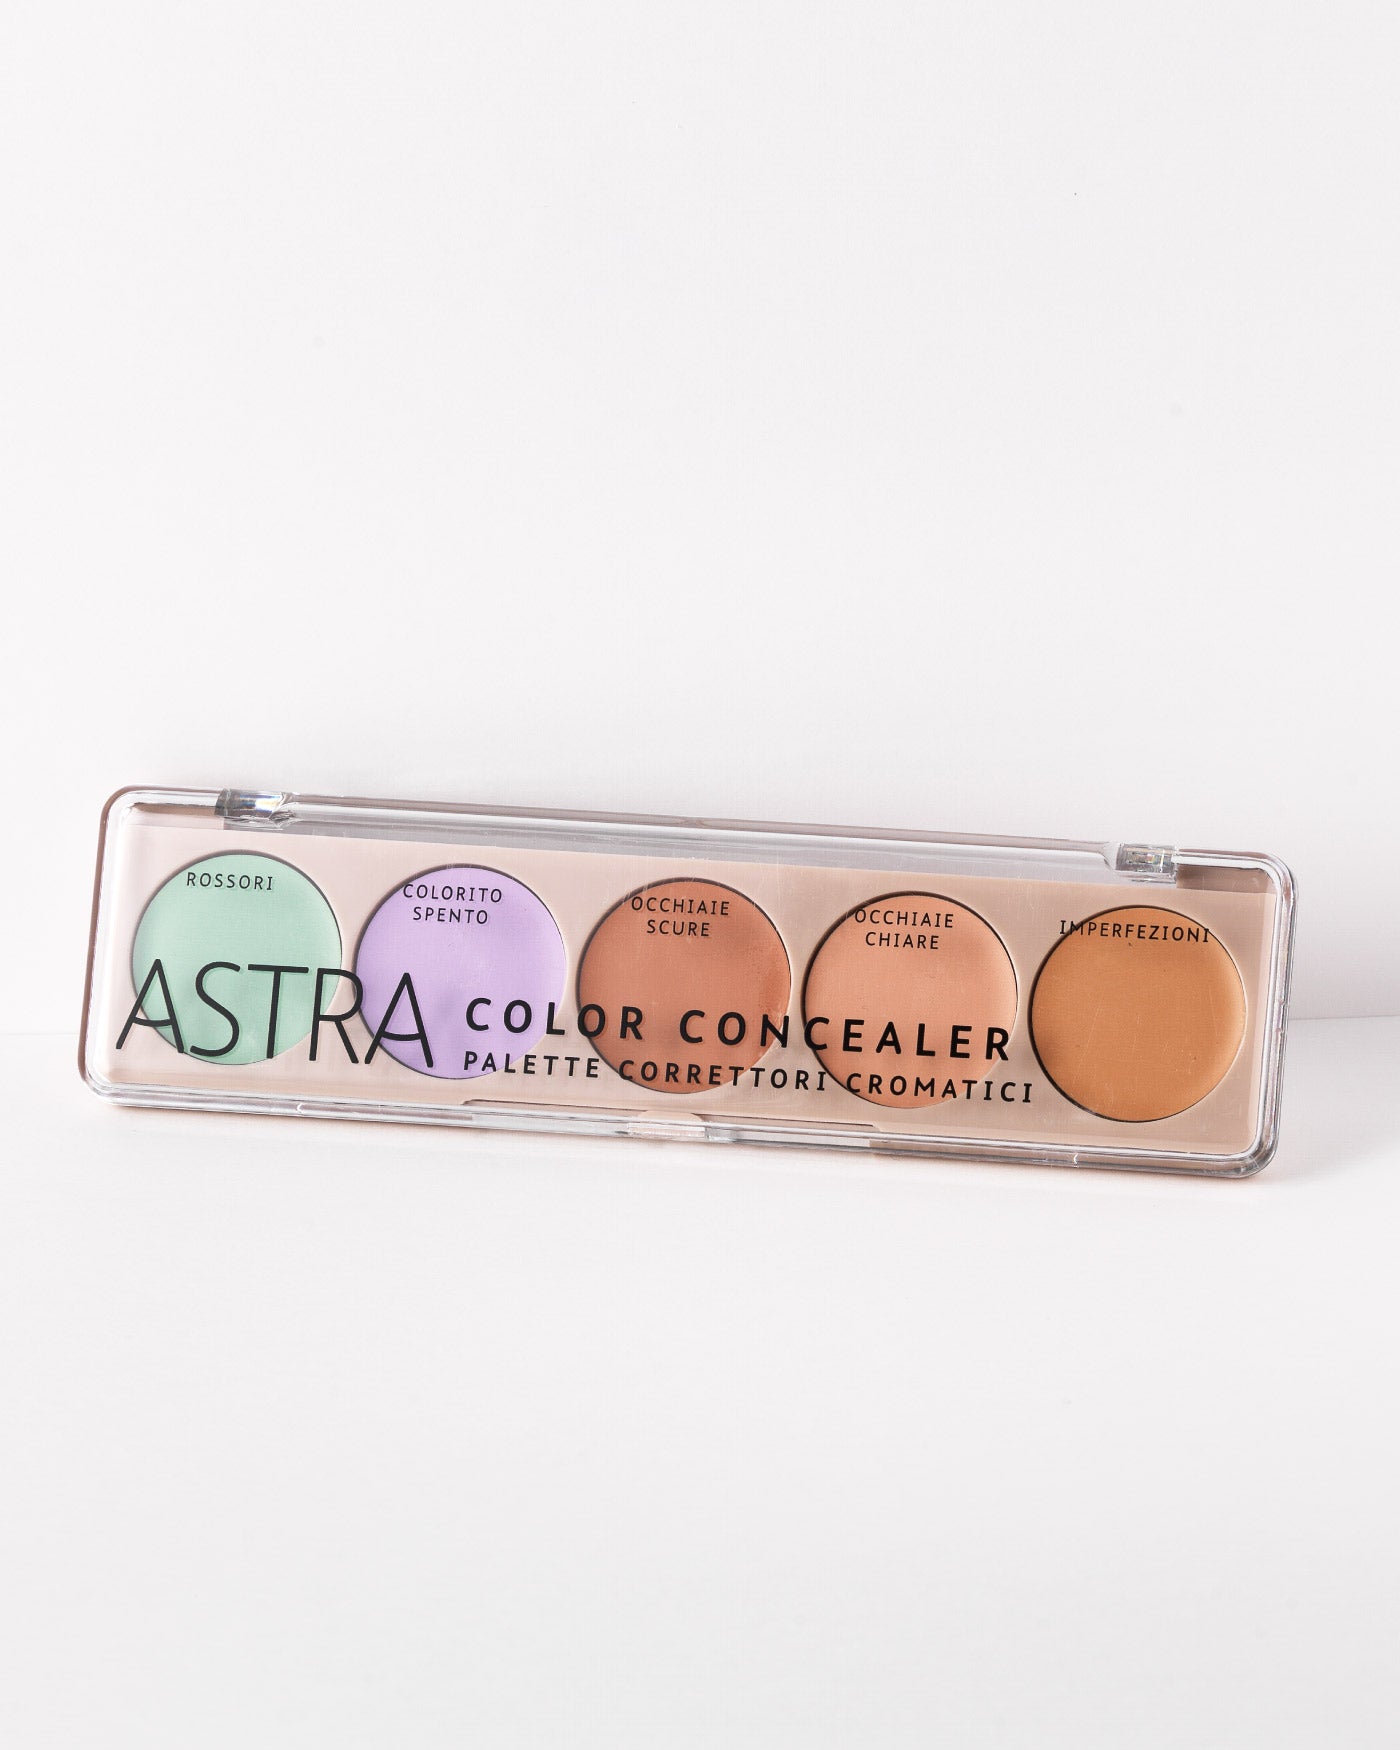 COLOR CONCEALER - Palette Viso Correttori Cromatici - Viso - Astra Make-Up